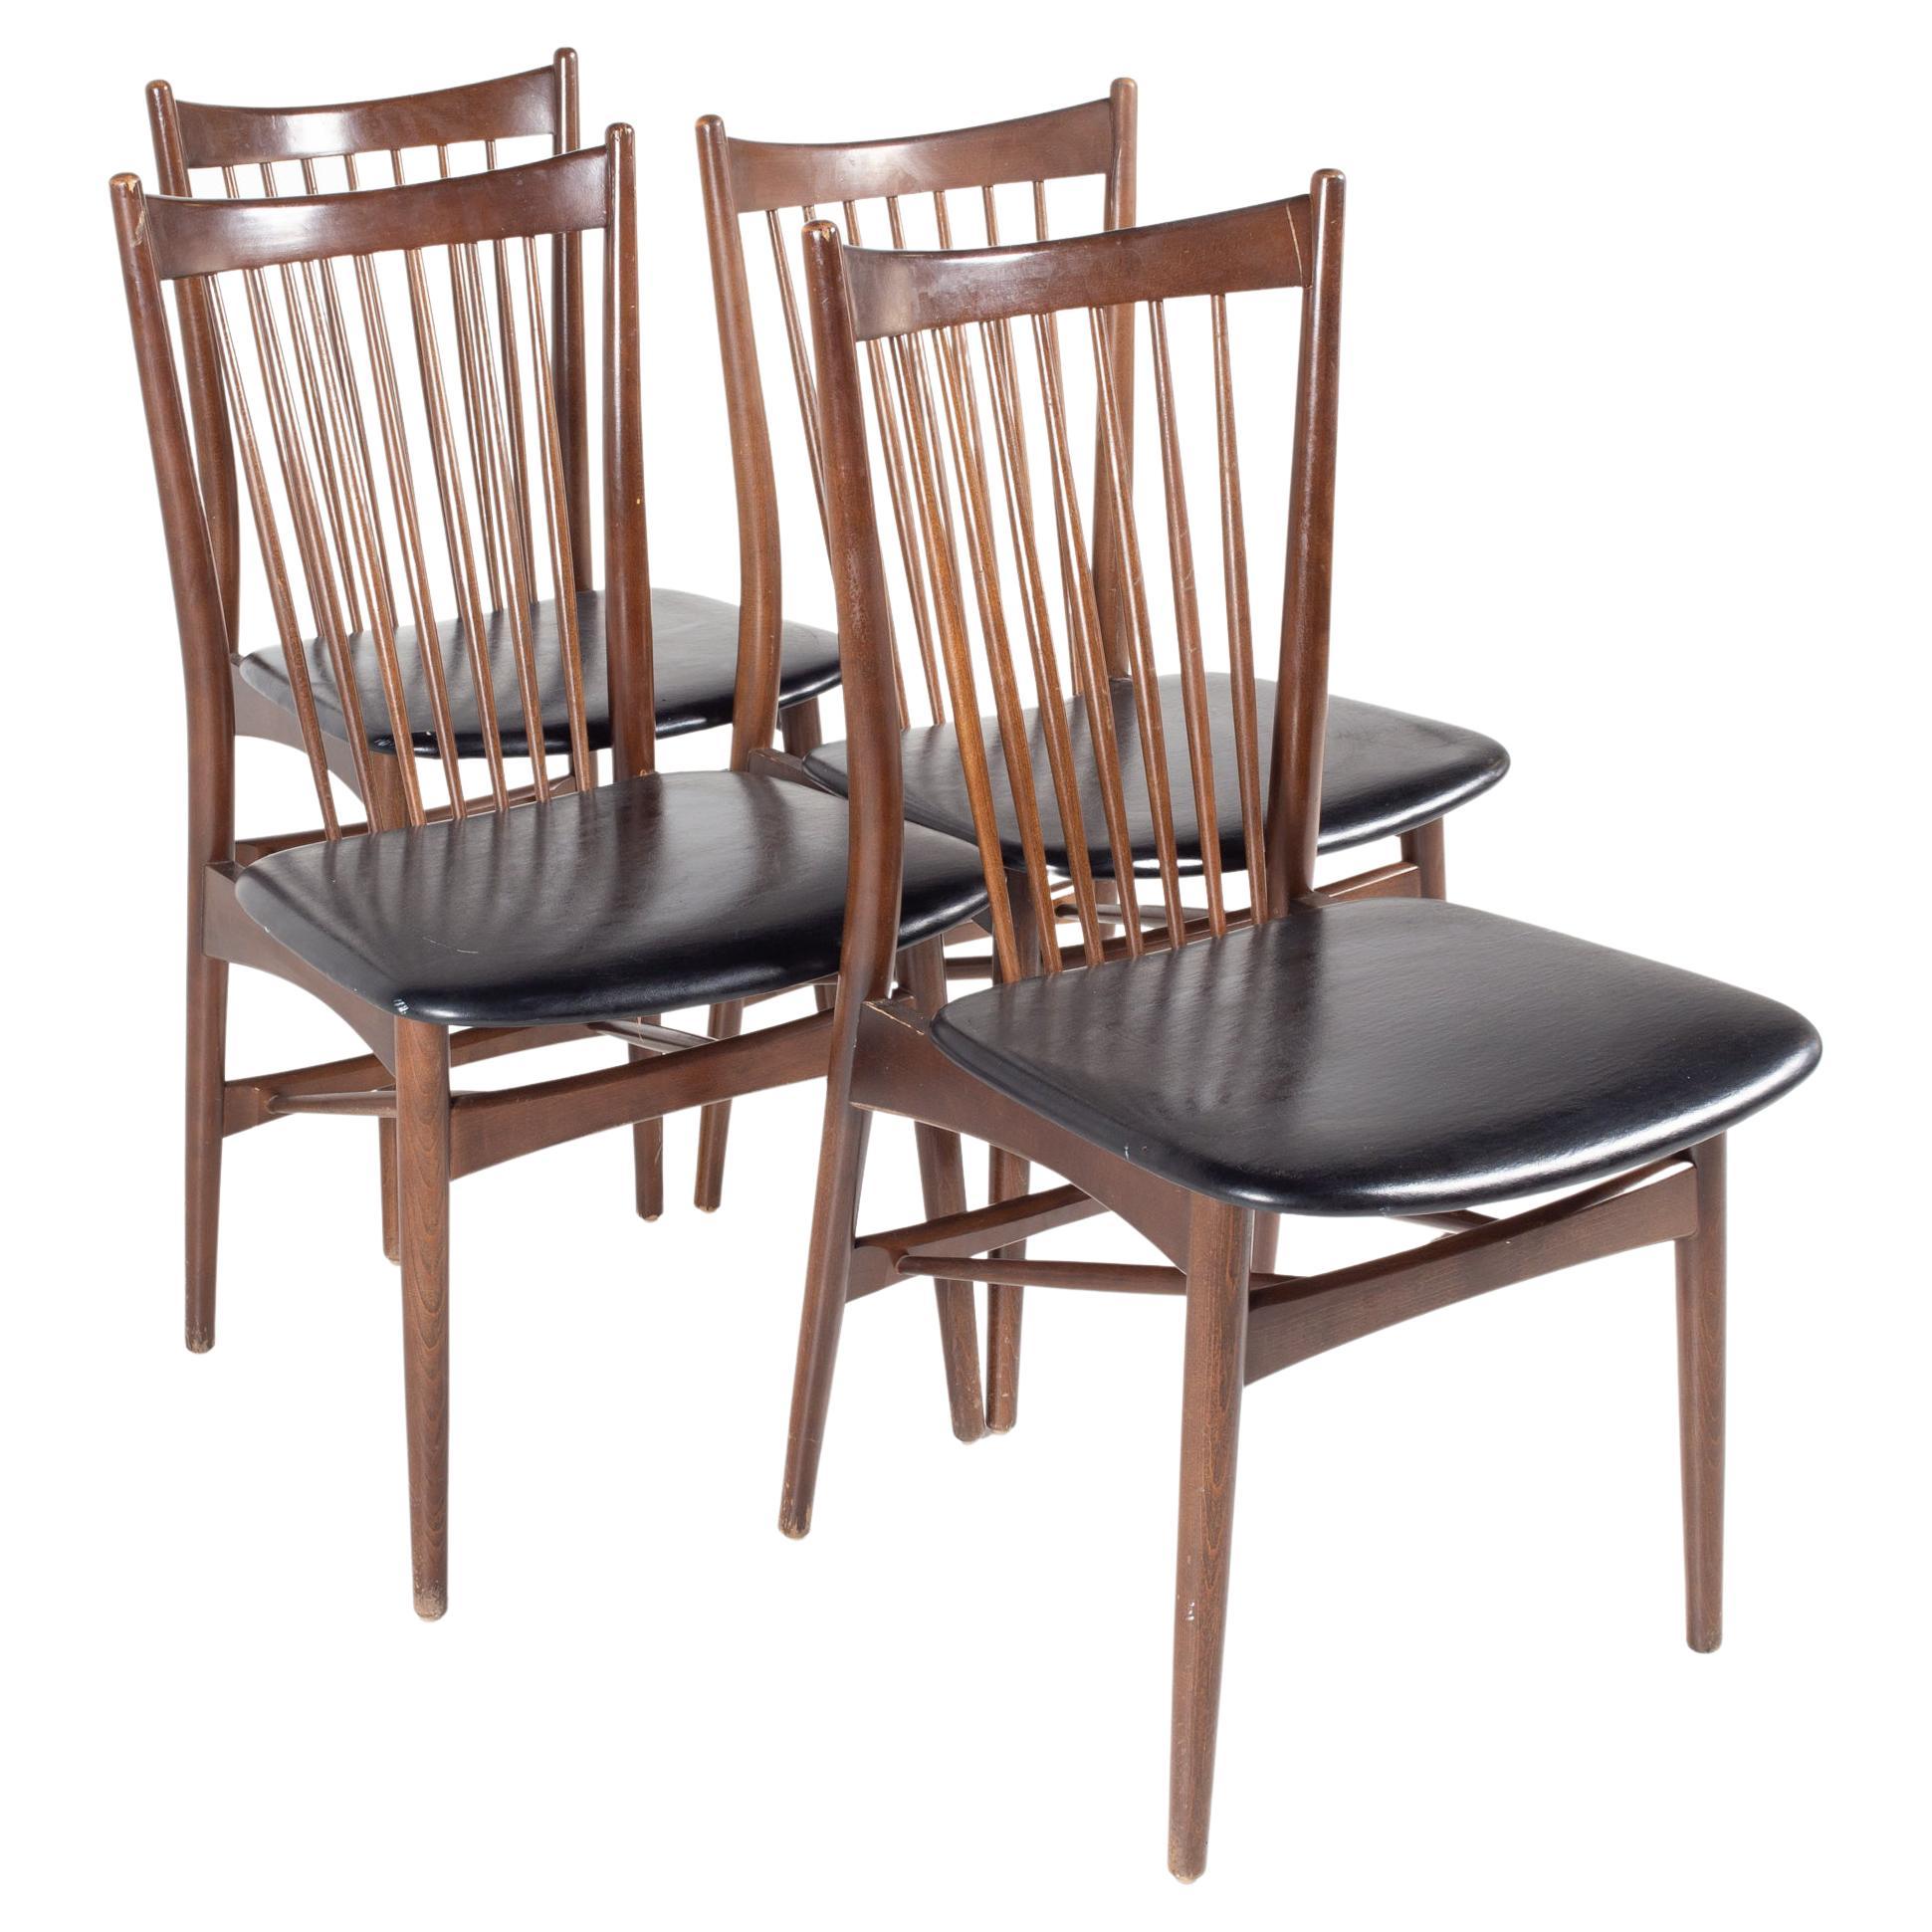 Viko Baumritter Style Mid Century Walnut Dining Chairs, Set of 4